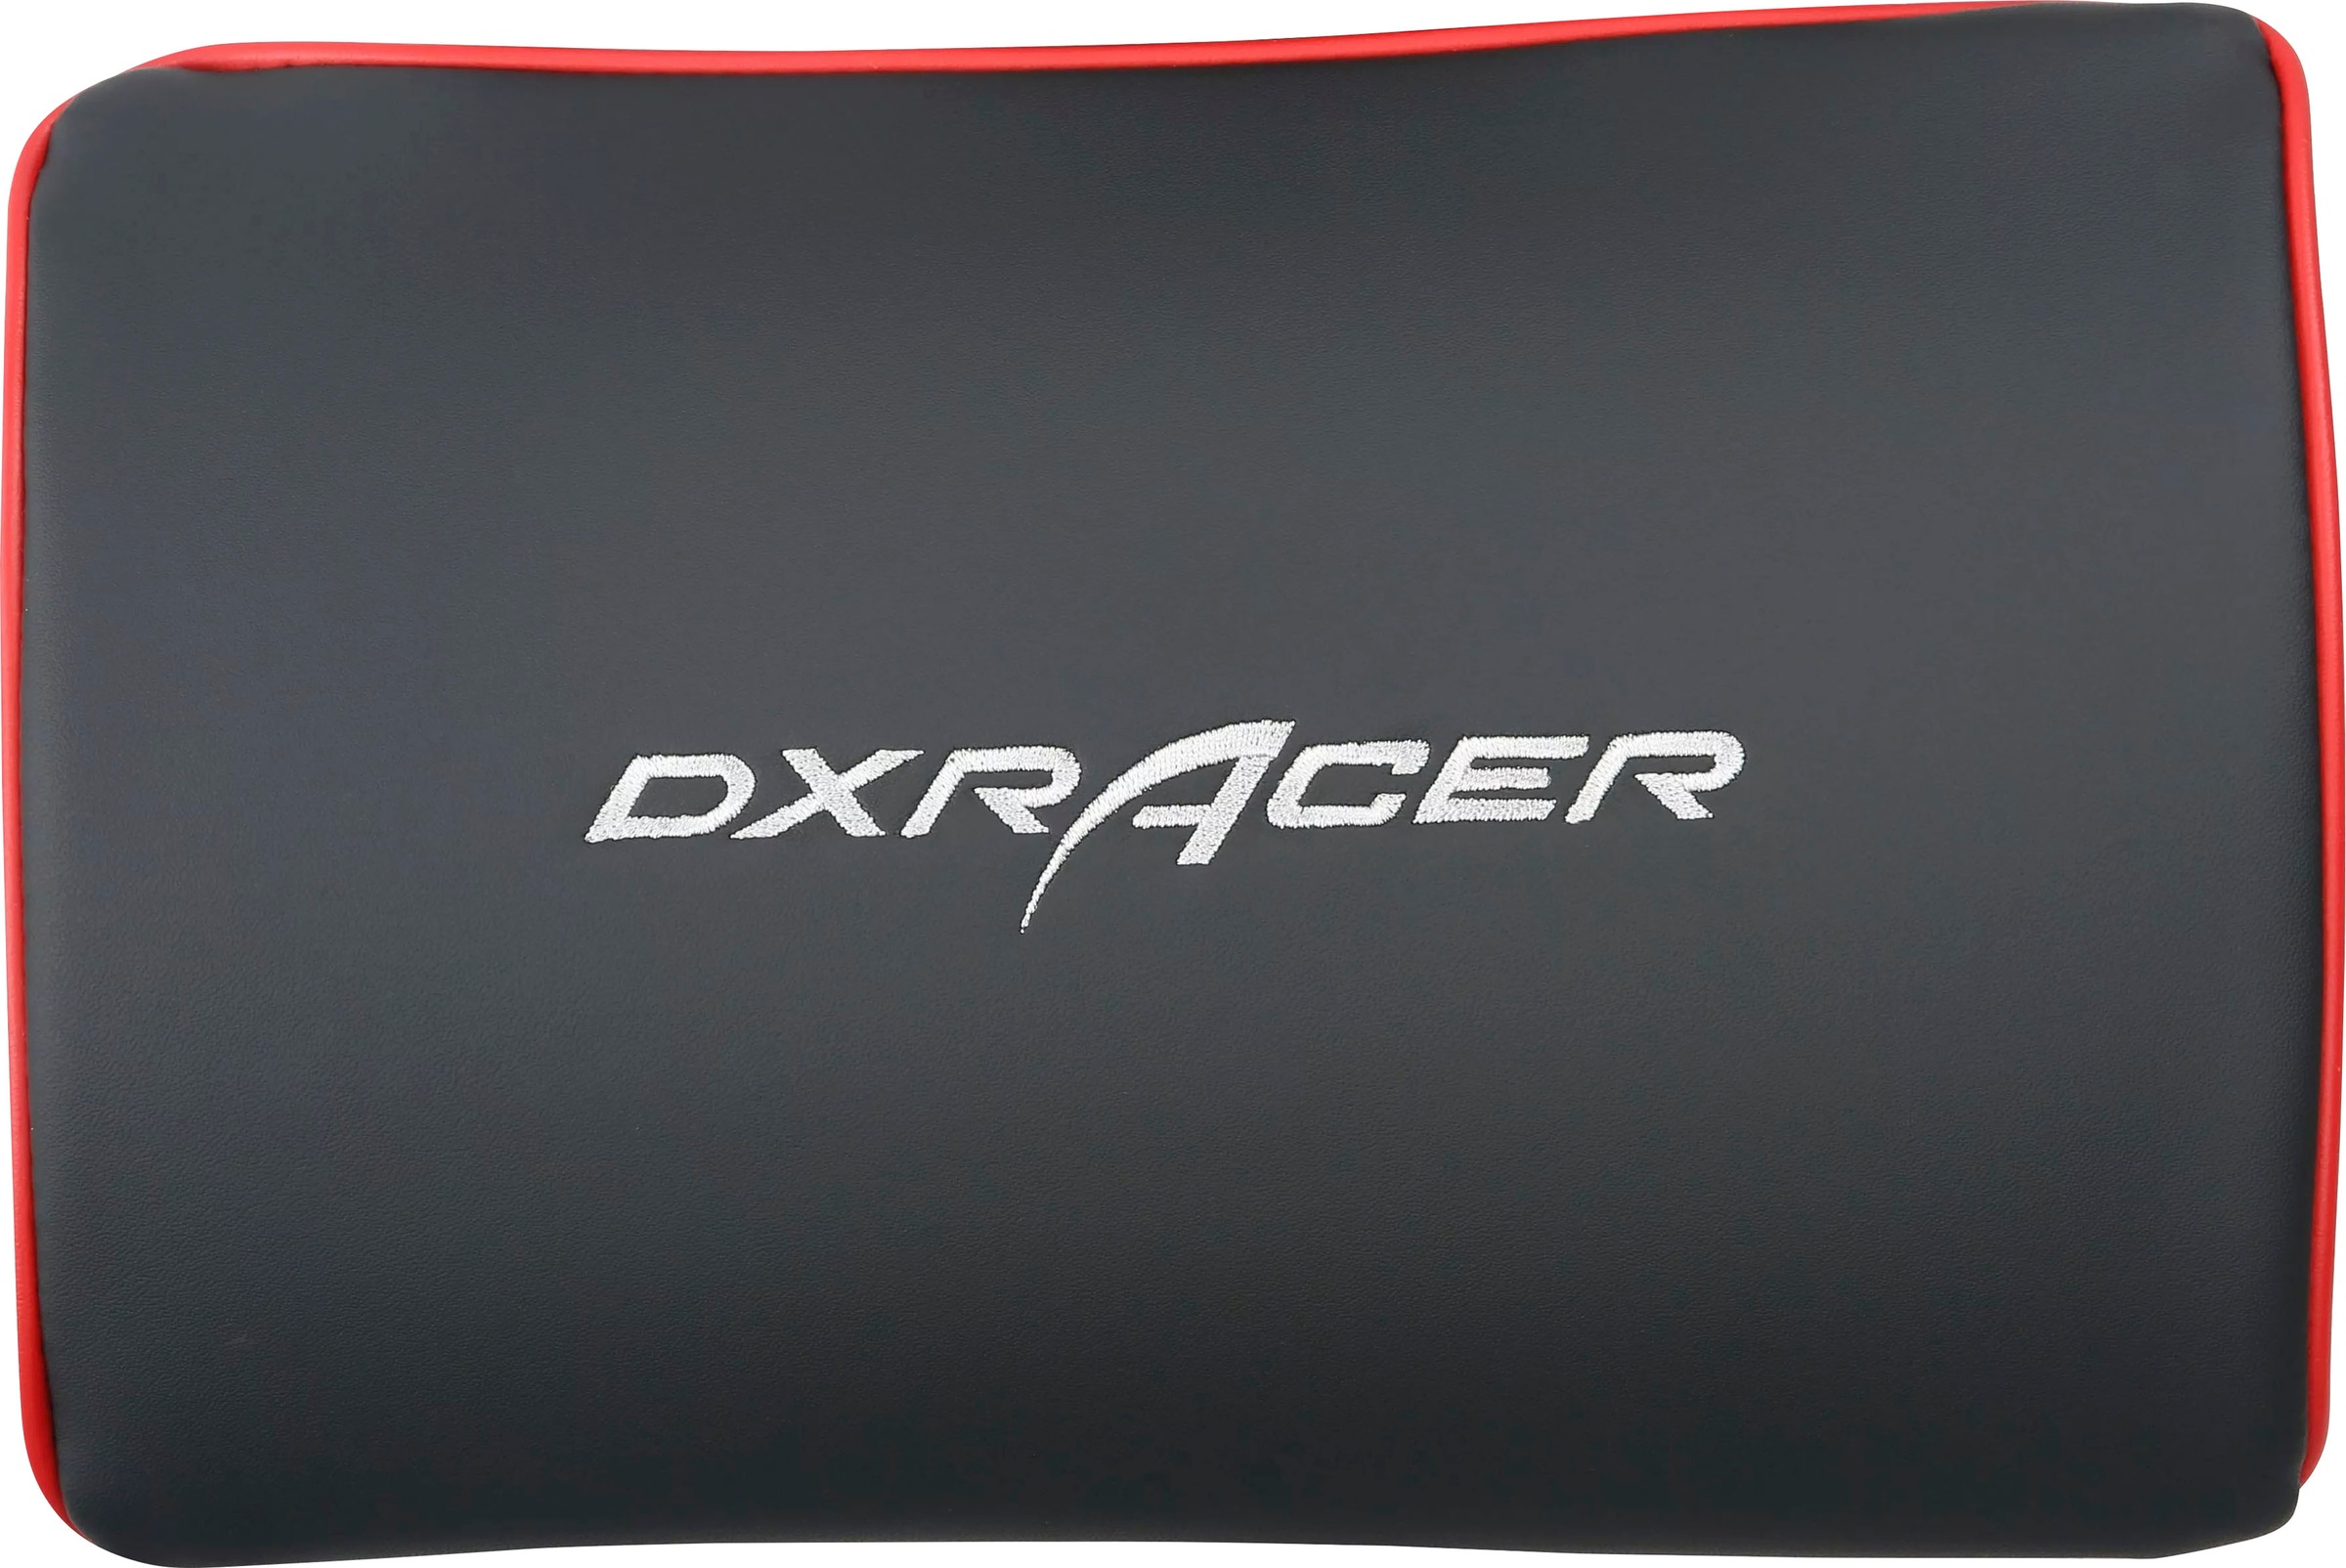 DXRacer USA LLC Mercari, OFF 43